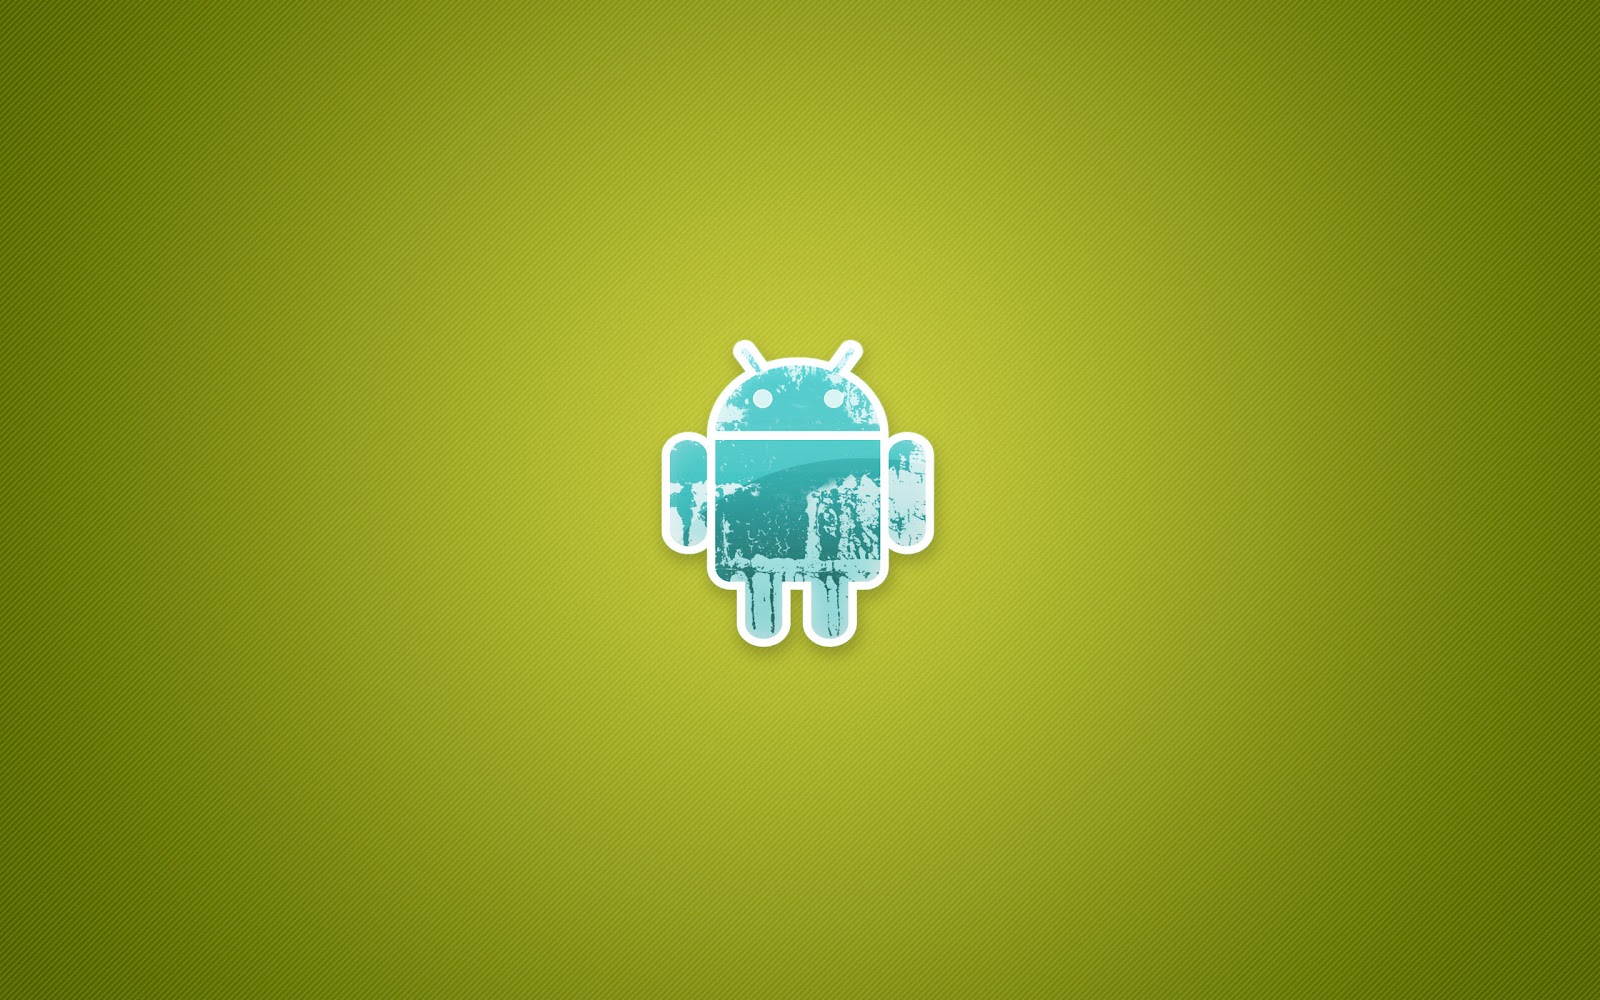 Cran Logo Android Wallpaper Haute R Solution Photo